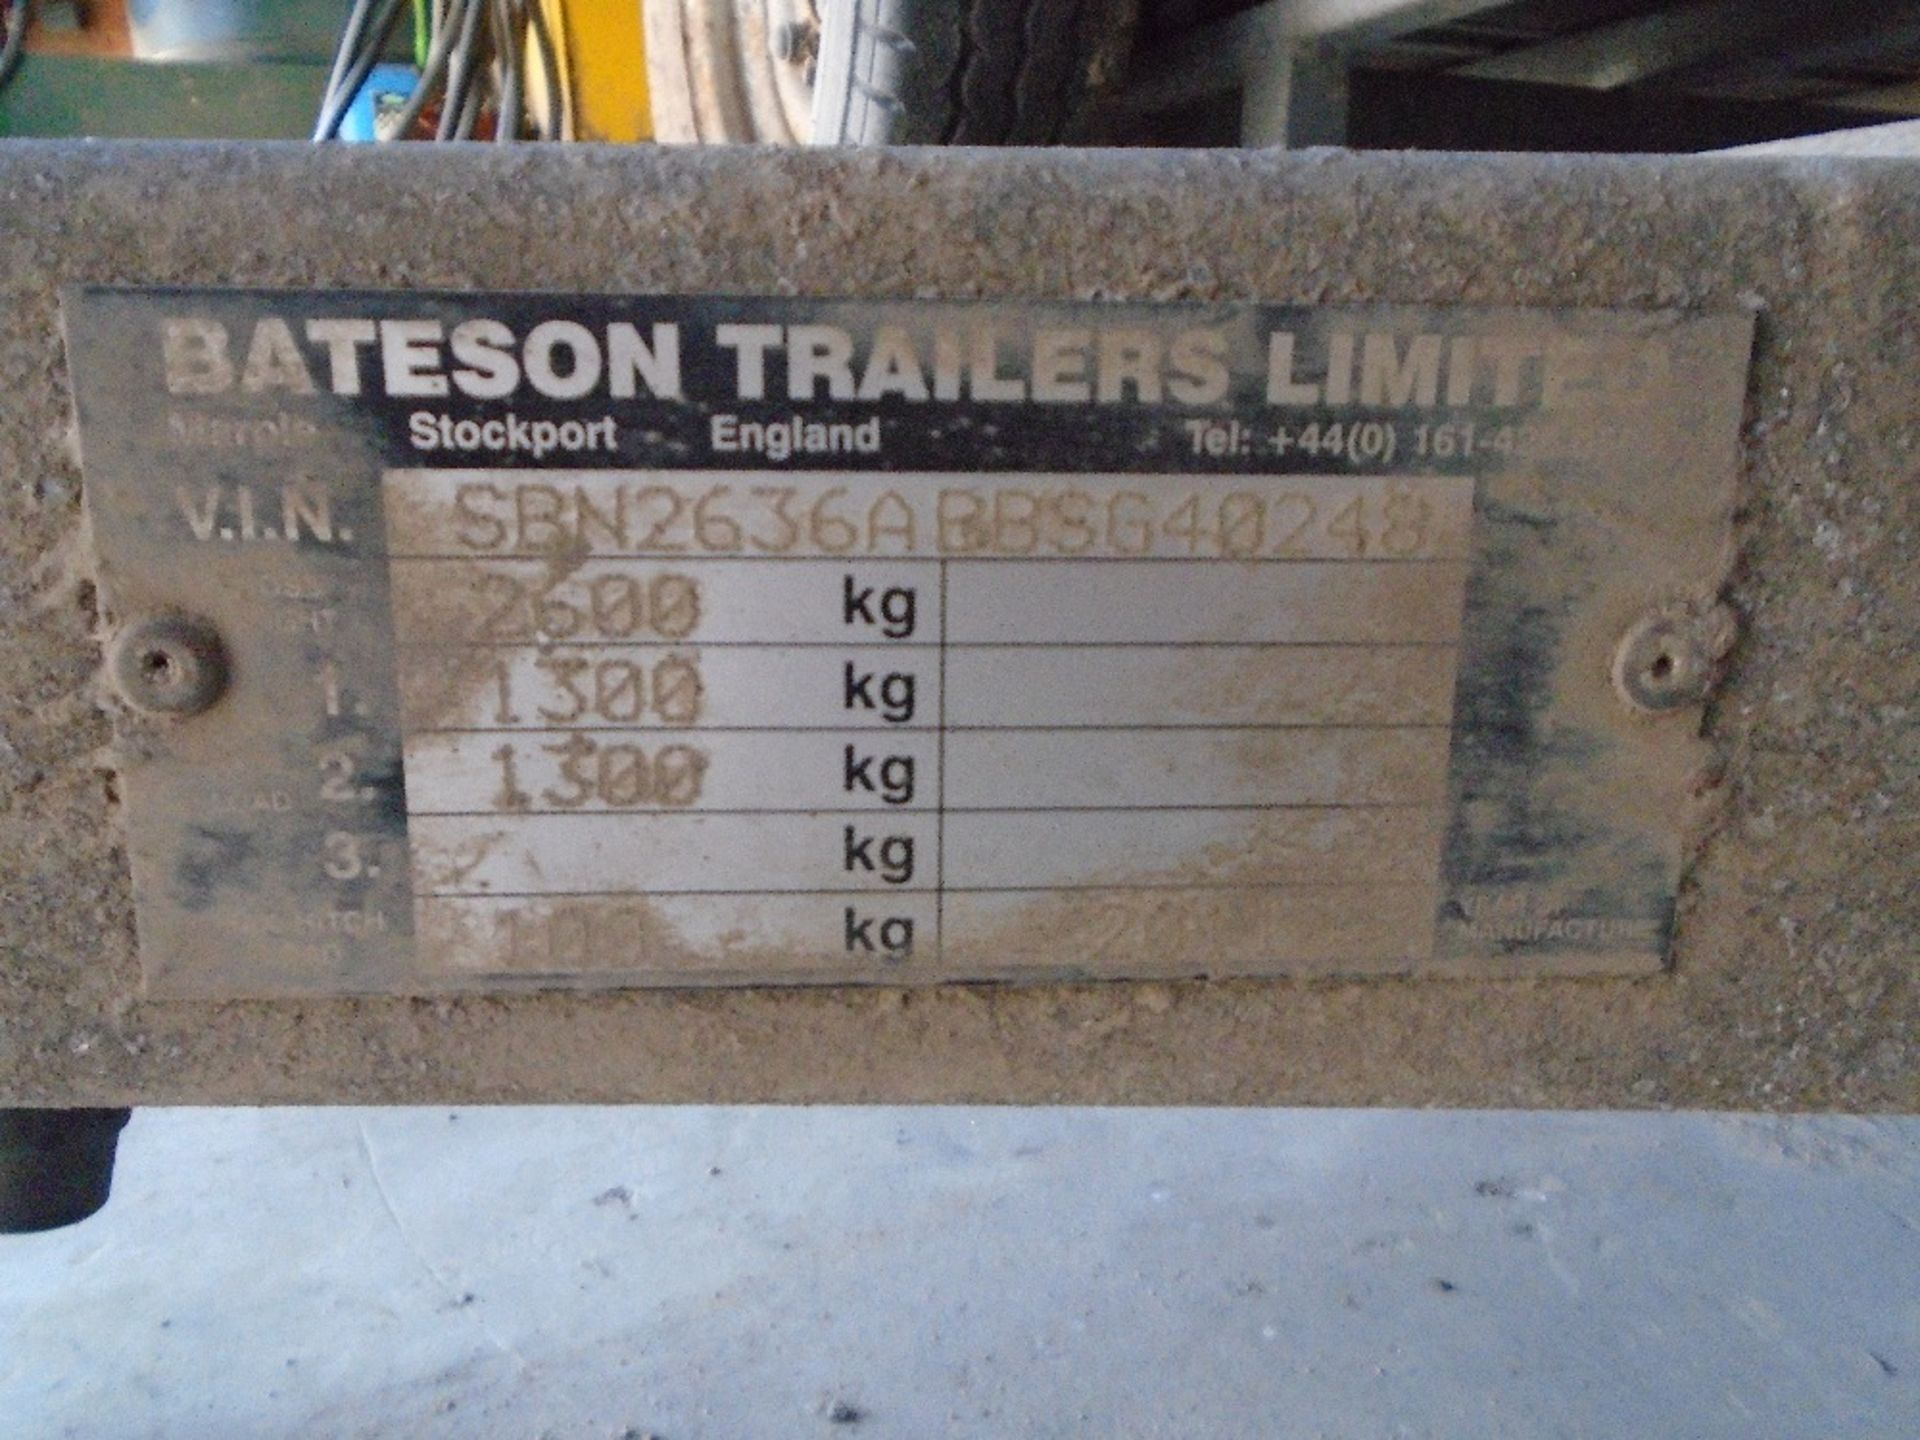 2001 BATESON FLAT TRAILER 12' X 6'6" - Image 2 of 3